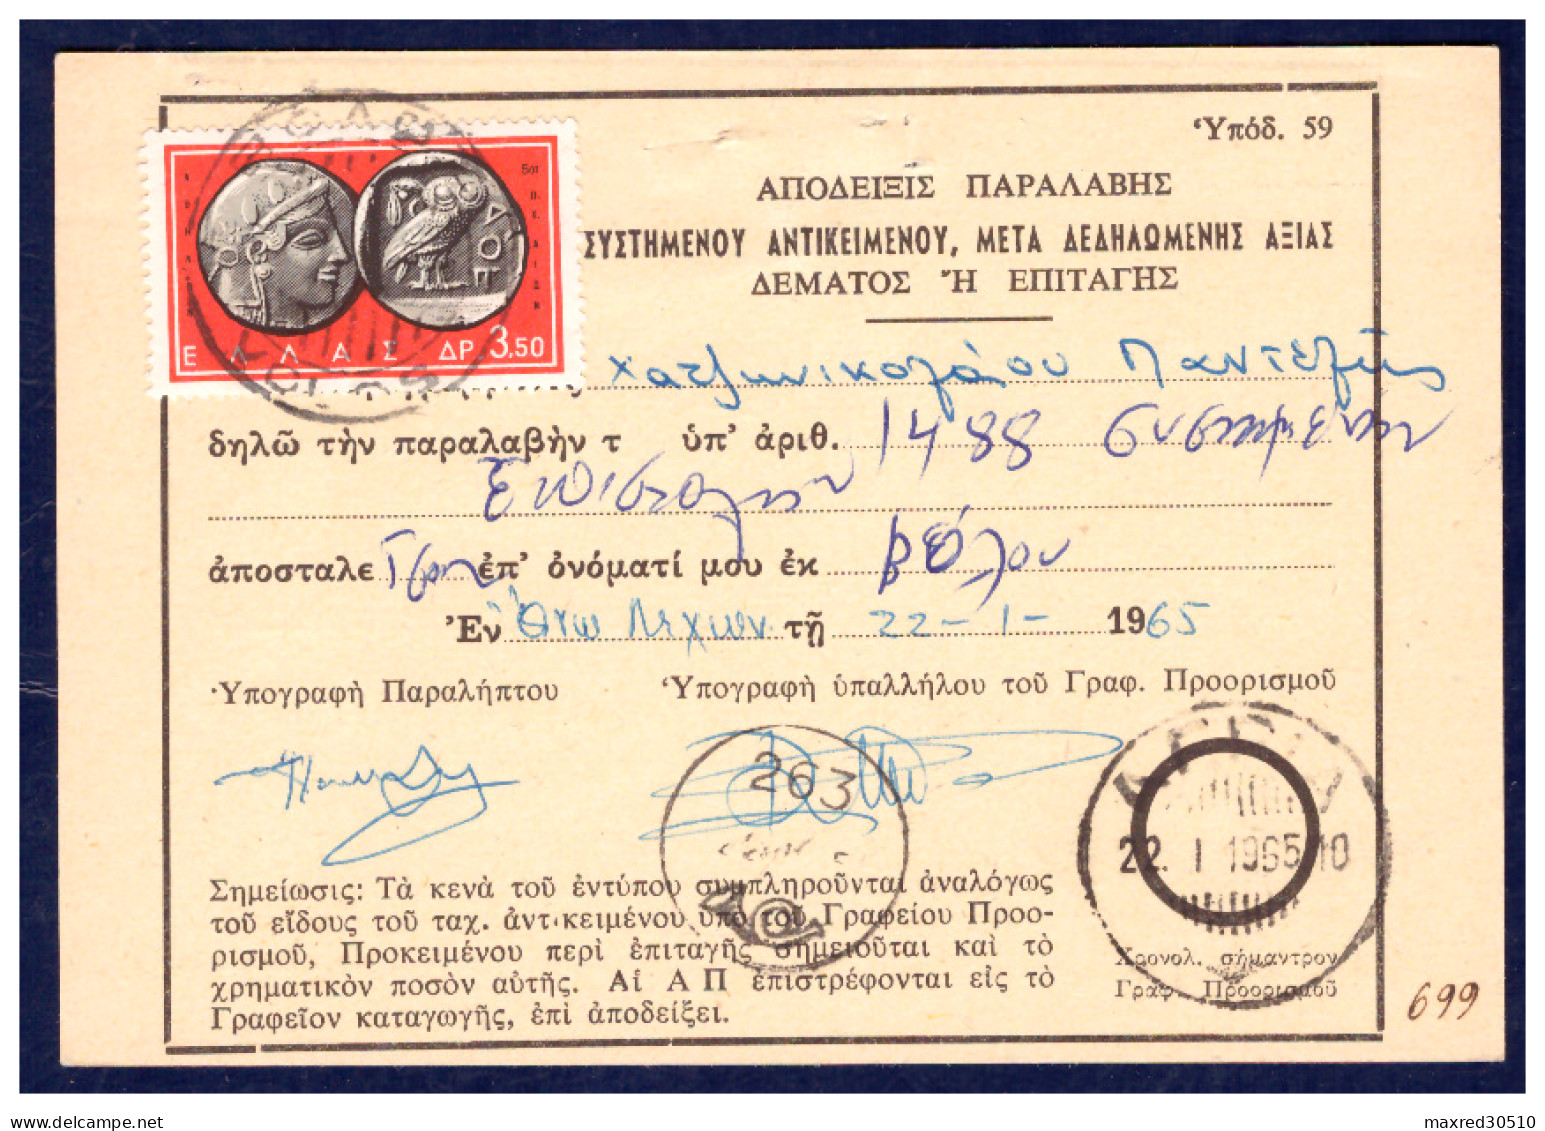 GREECE GREEK RURAL POSTMARK No "263" ANO LECHONIA / AGRIA - MUNICIPALITY OF NEILIAS (MAGNESIA) ON O. P. D. R. - Postal Logo & Postmarks